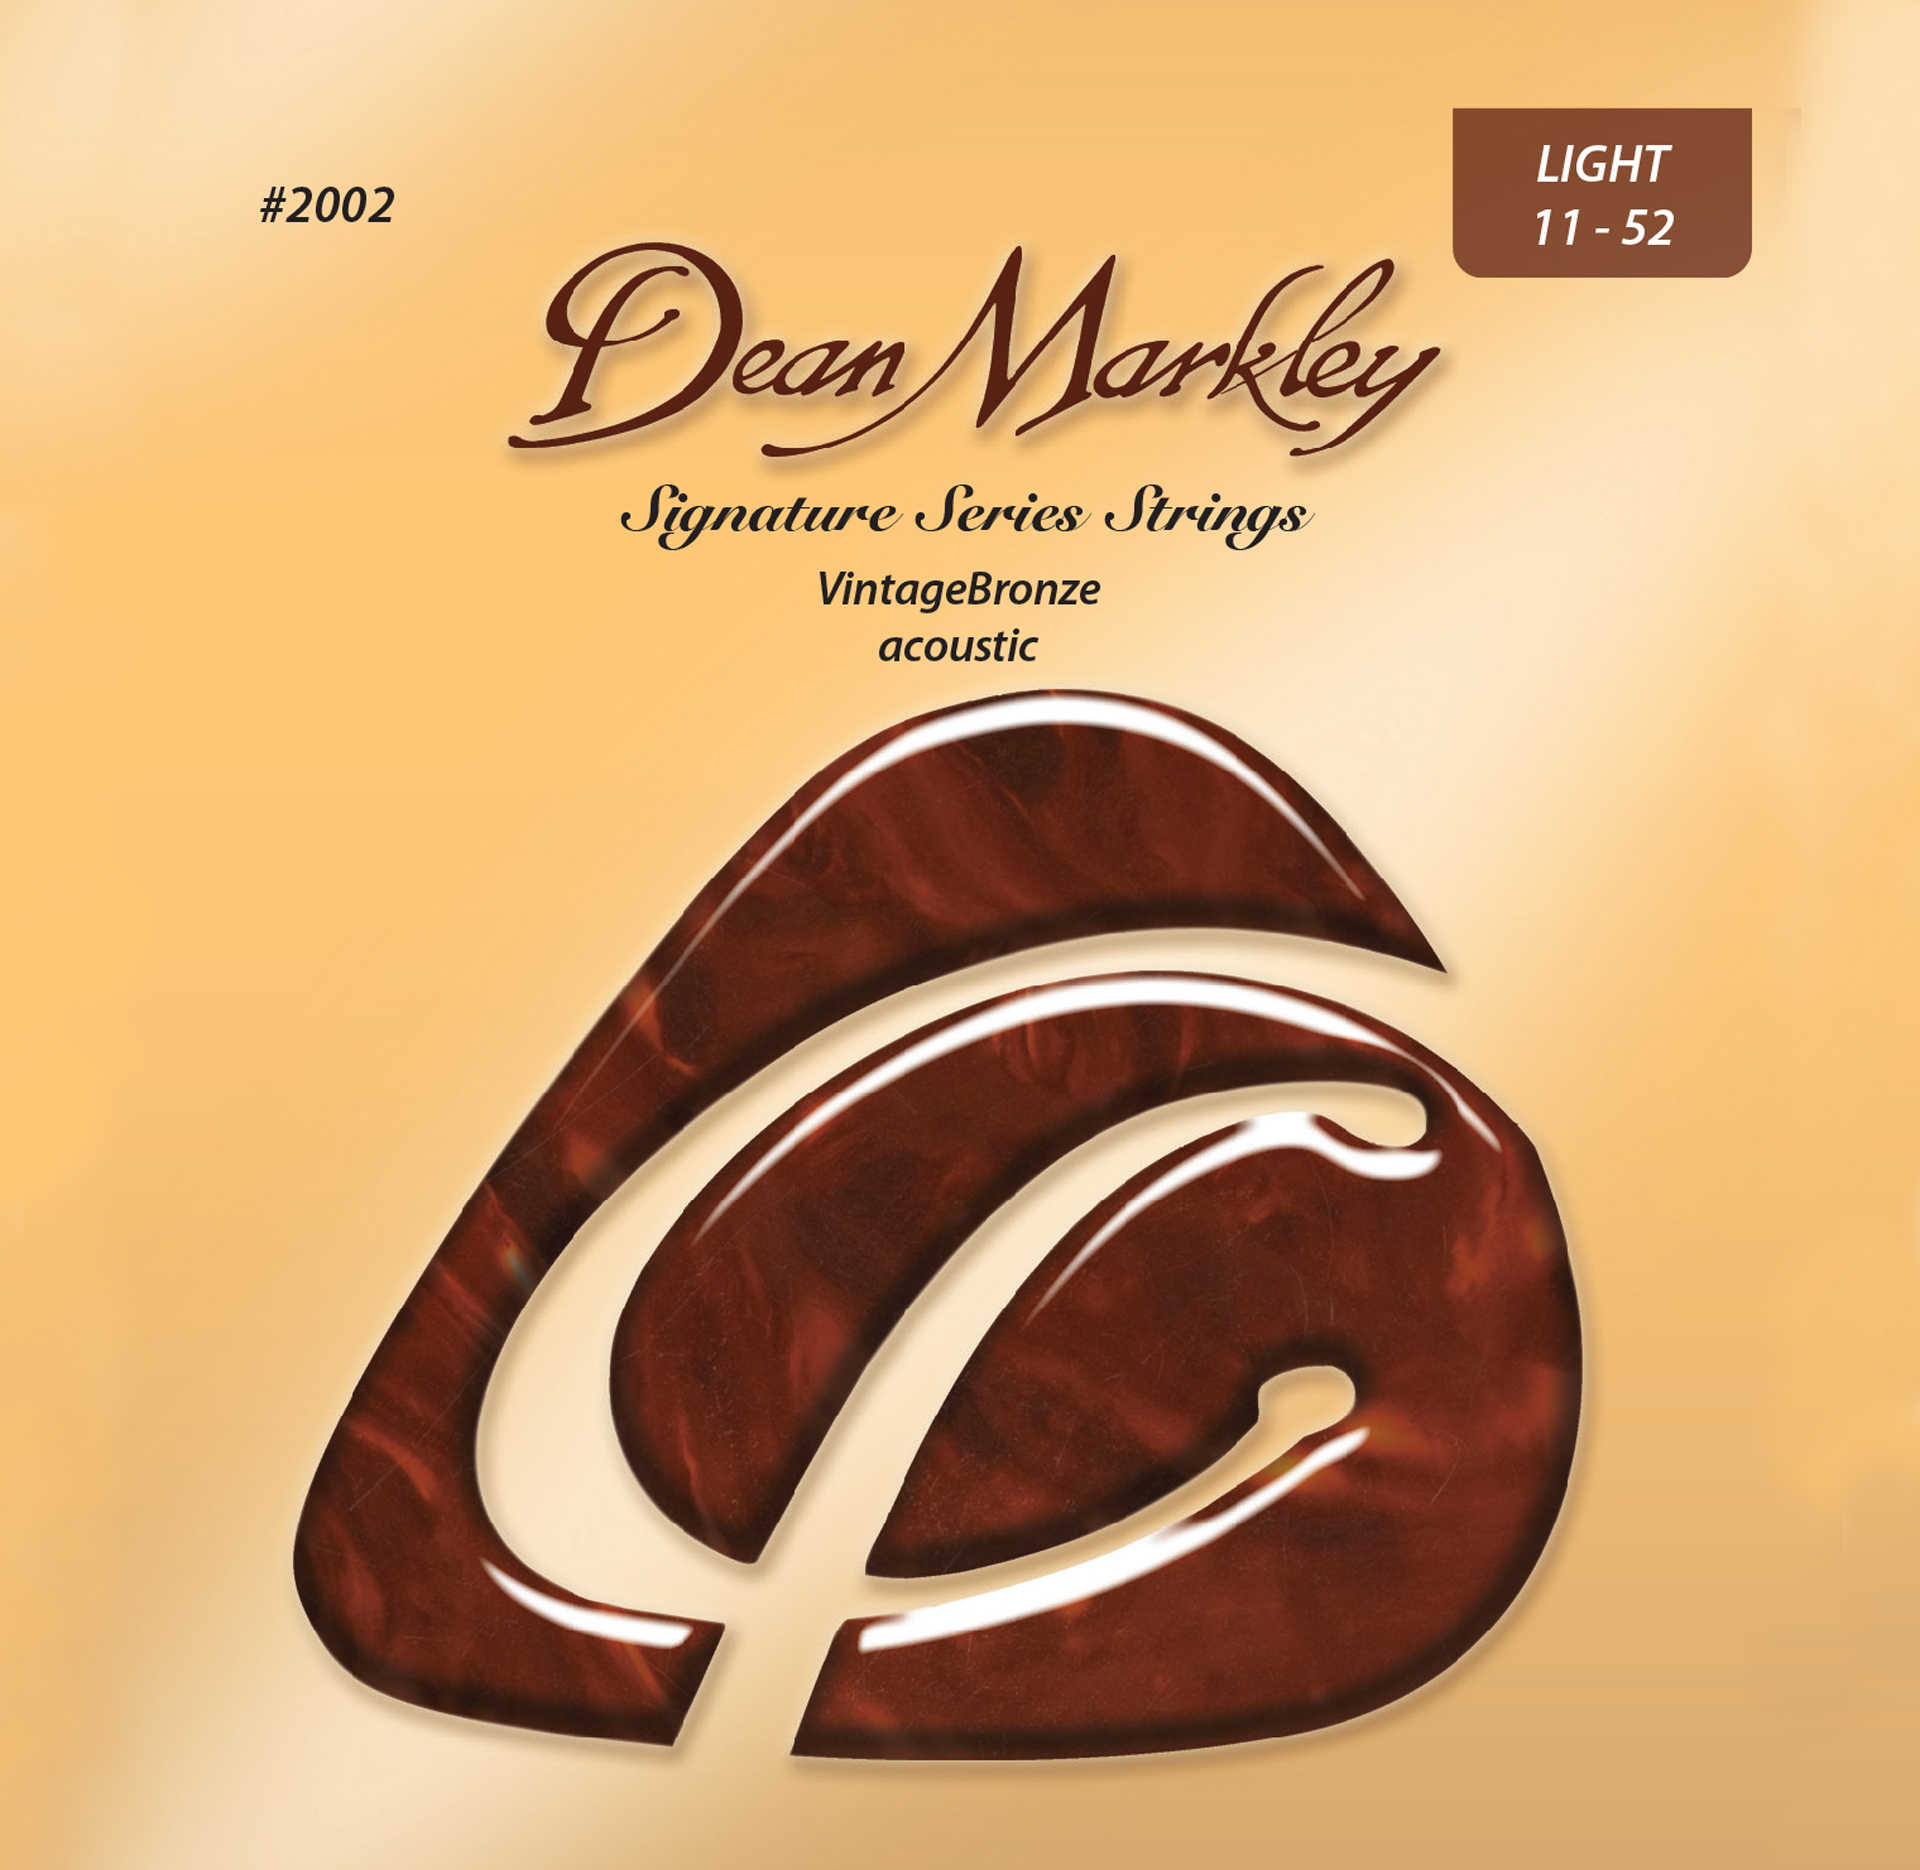 Dean Markley VintageBronze Signature - 2002 - Acoustic Guitar String Set, Light, .011-.052